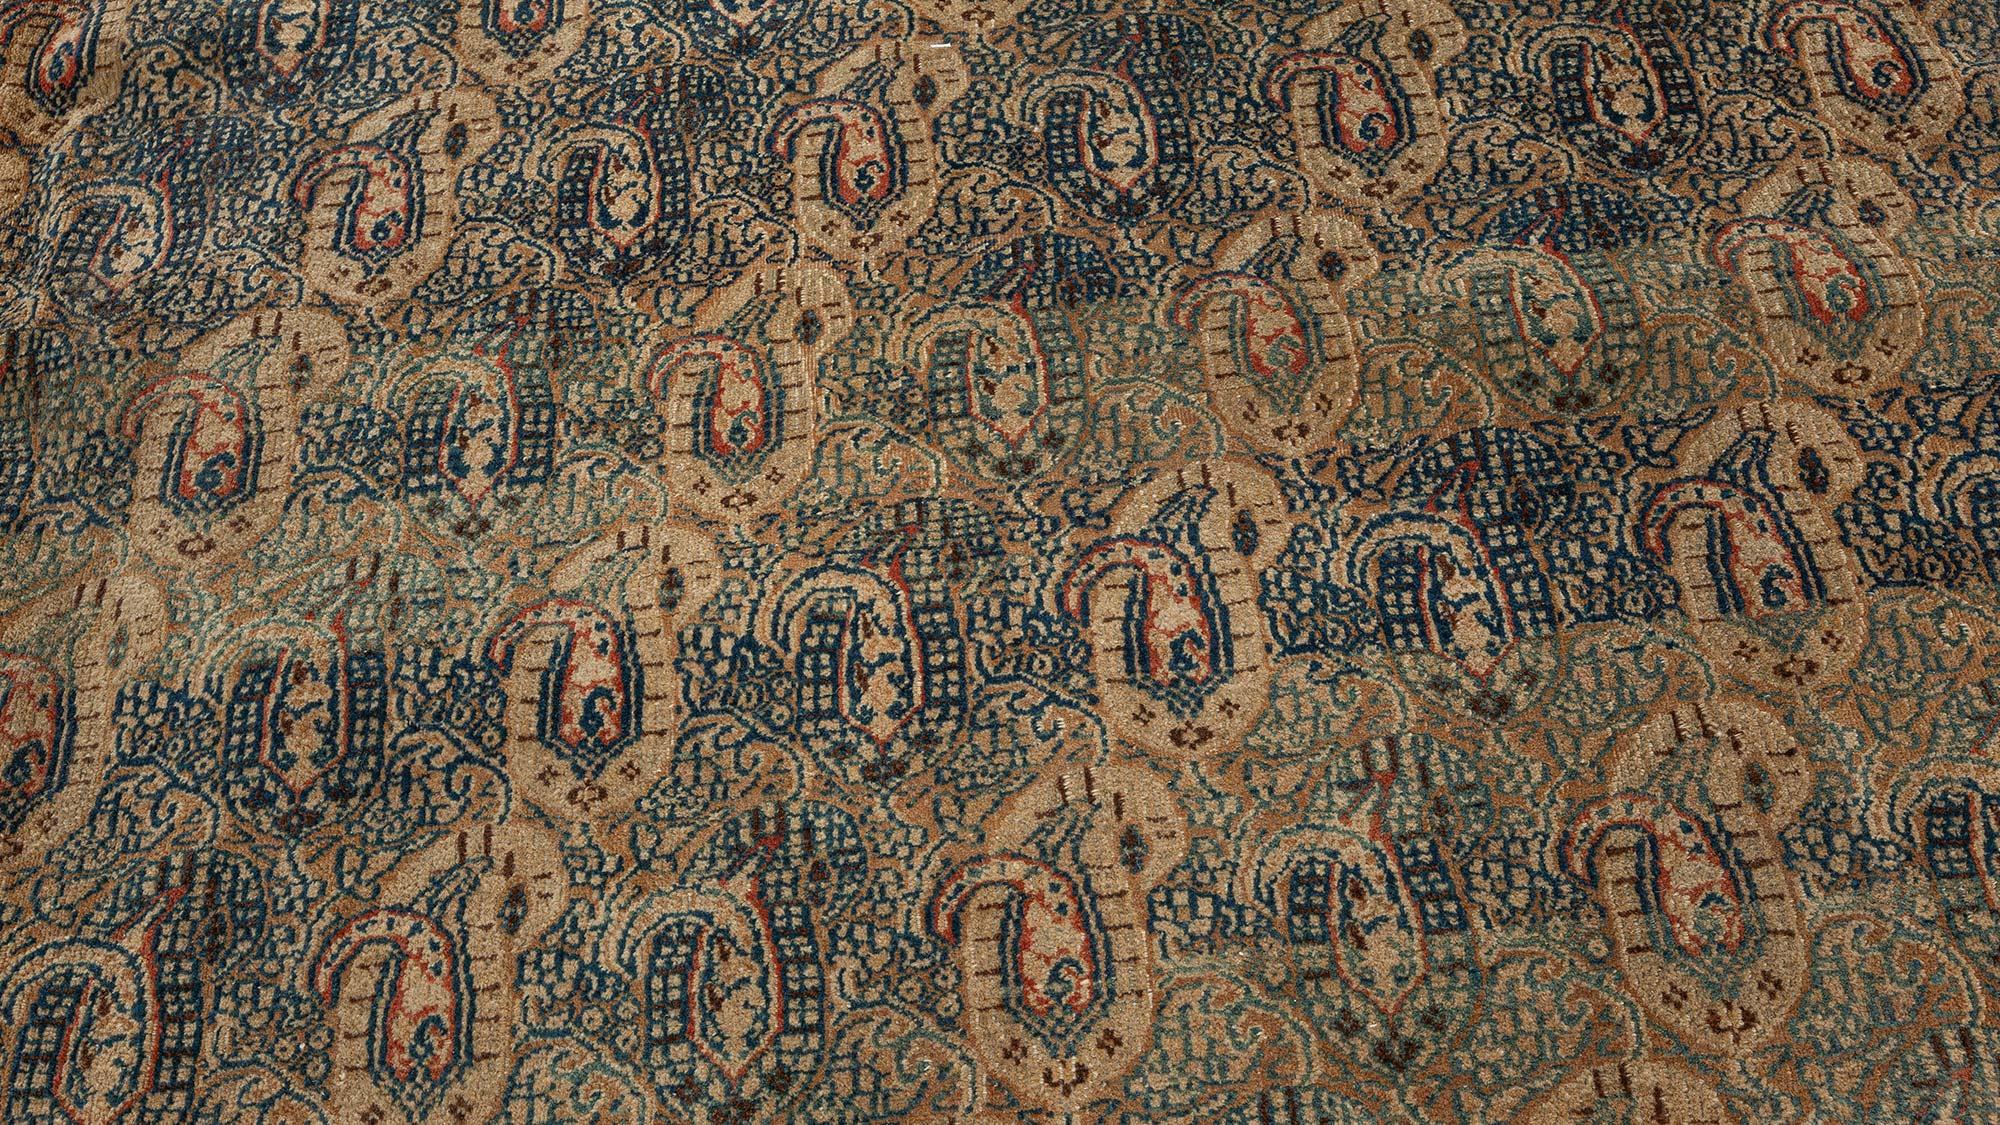 Authentic Persian Meshad Handmade Wool Rug
Size: 10'10